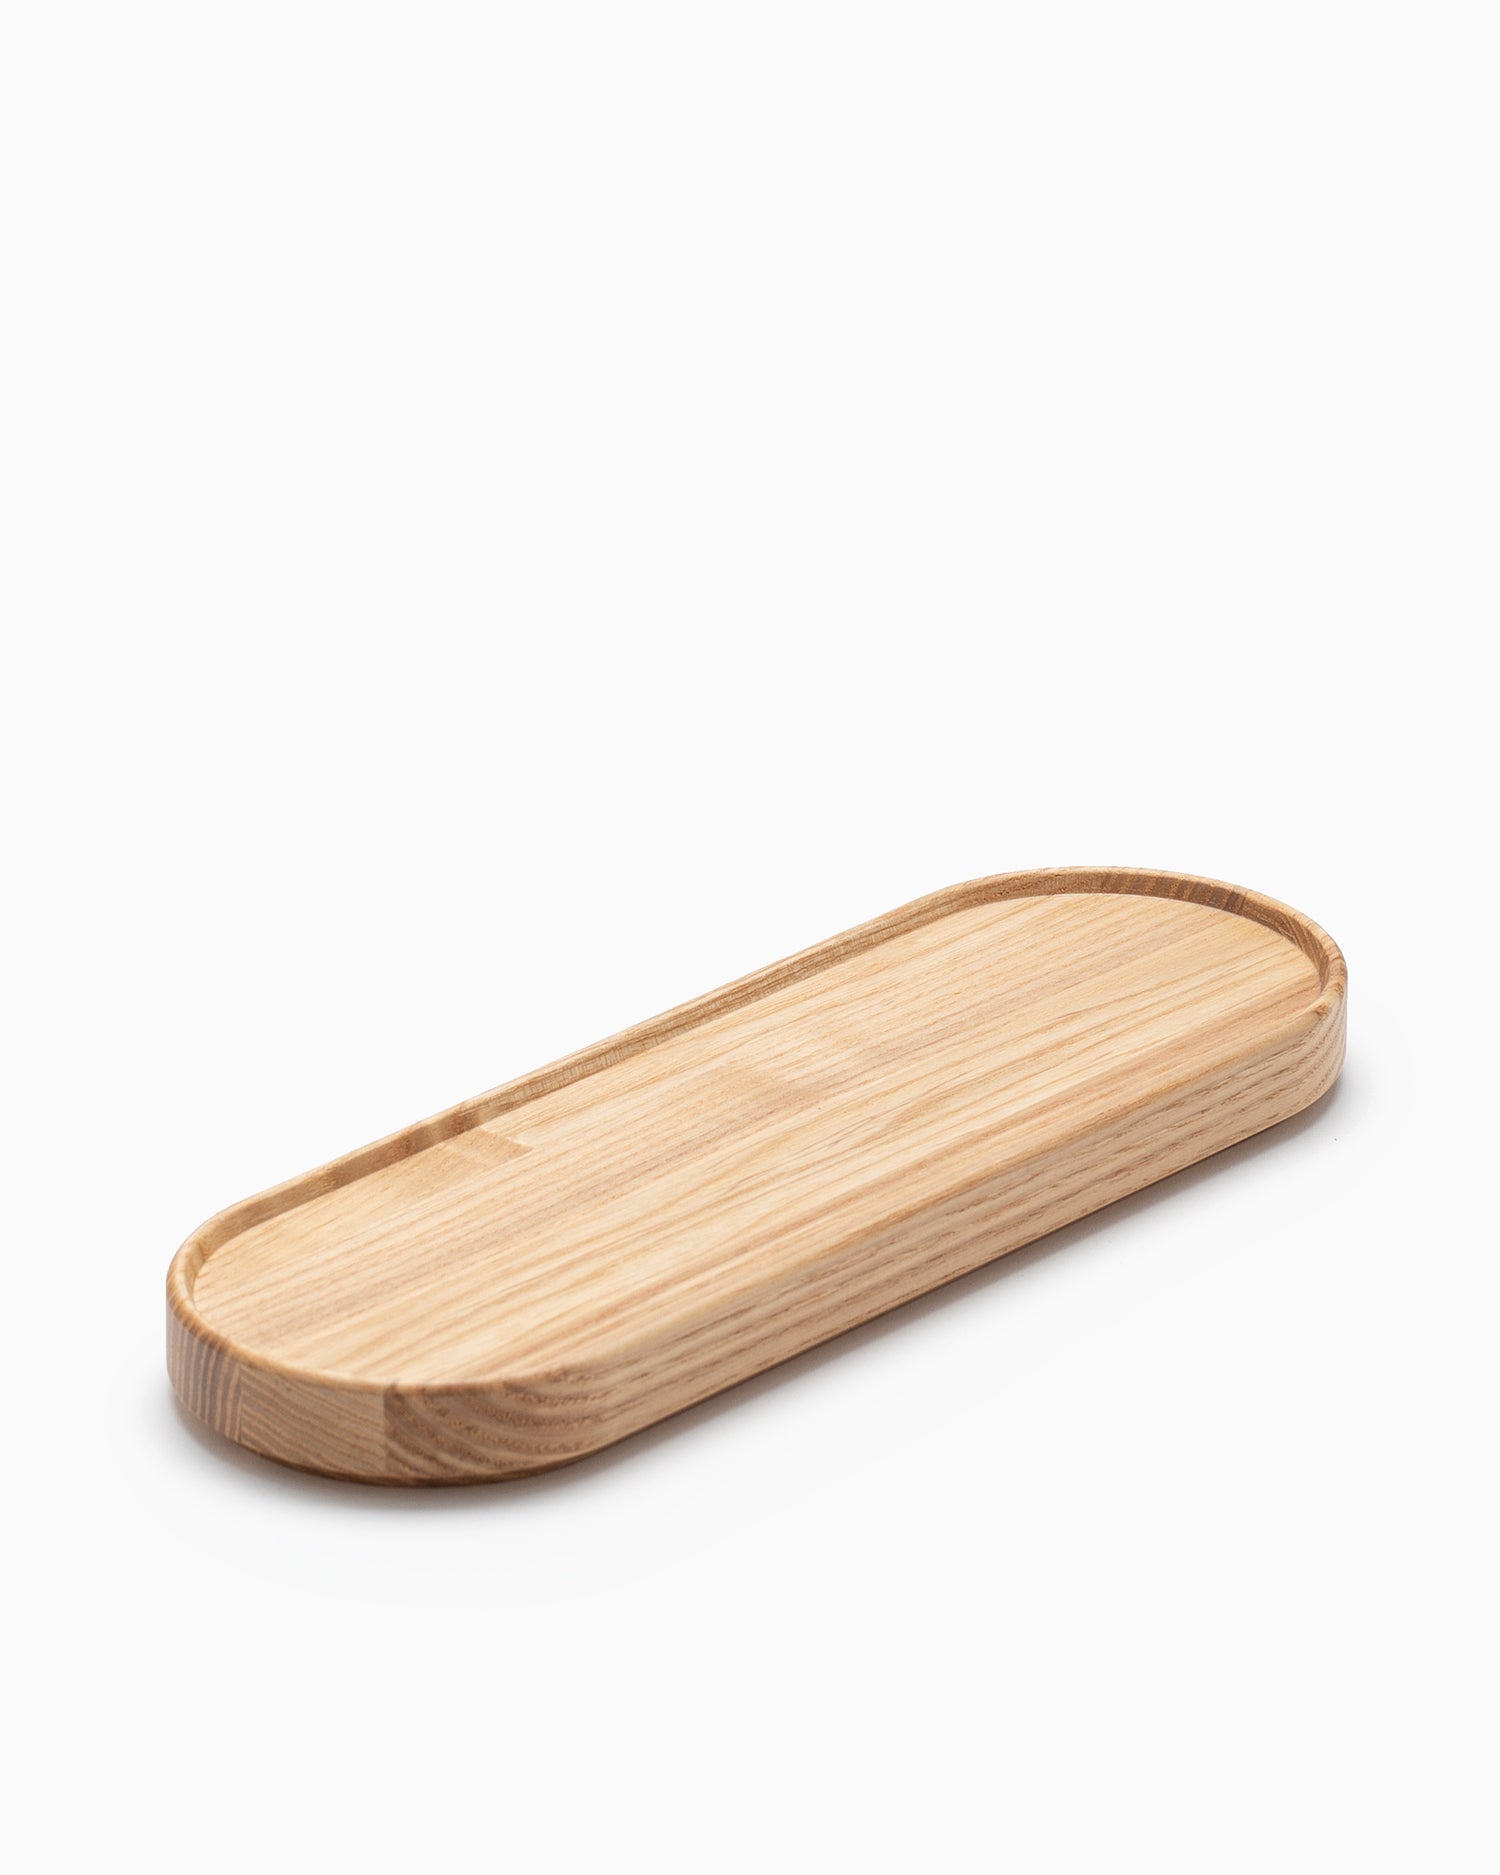 HP035 Ash Wooden Tray